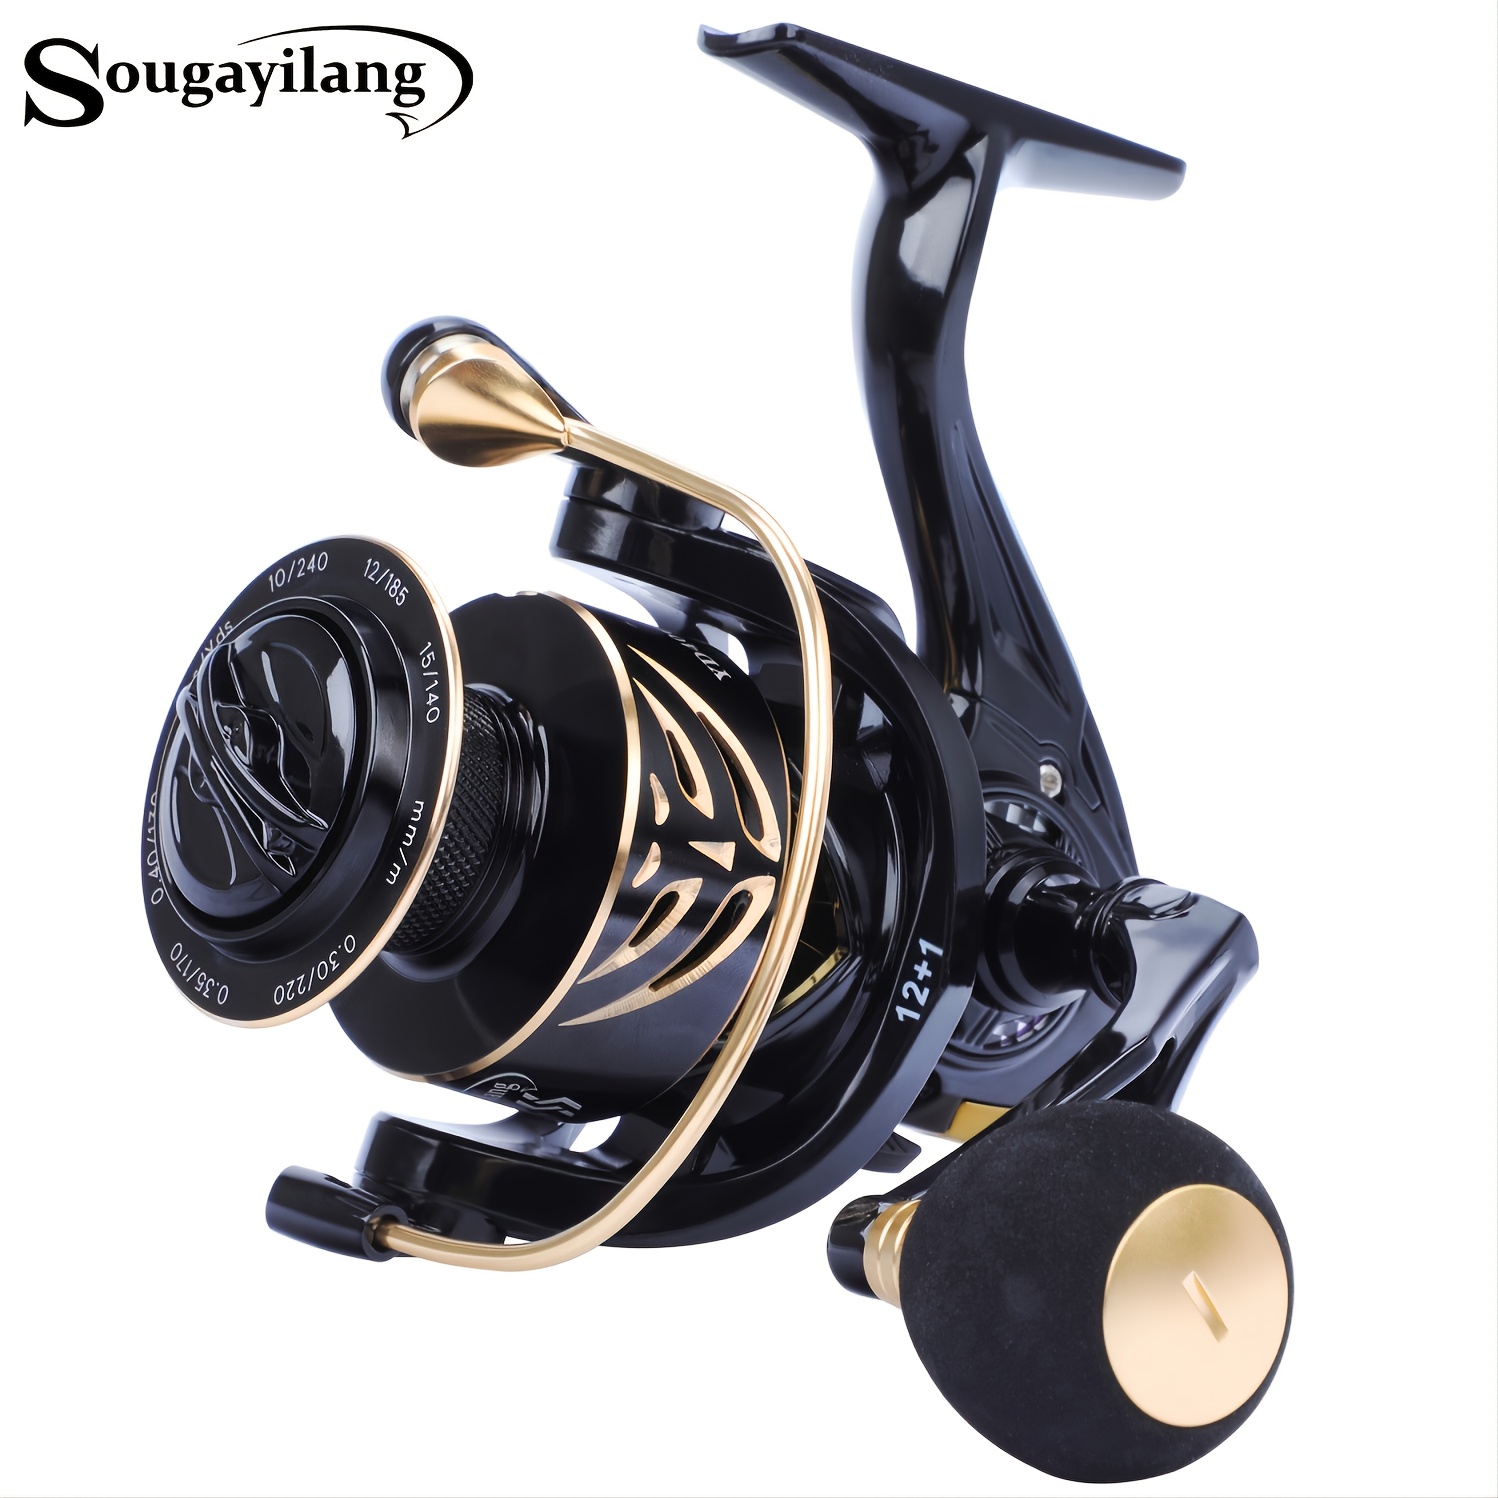 Sougayilang Spinning Reel - Smooth 12+1BB Fishing Reel with Comfortable CNC  Handle